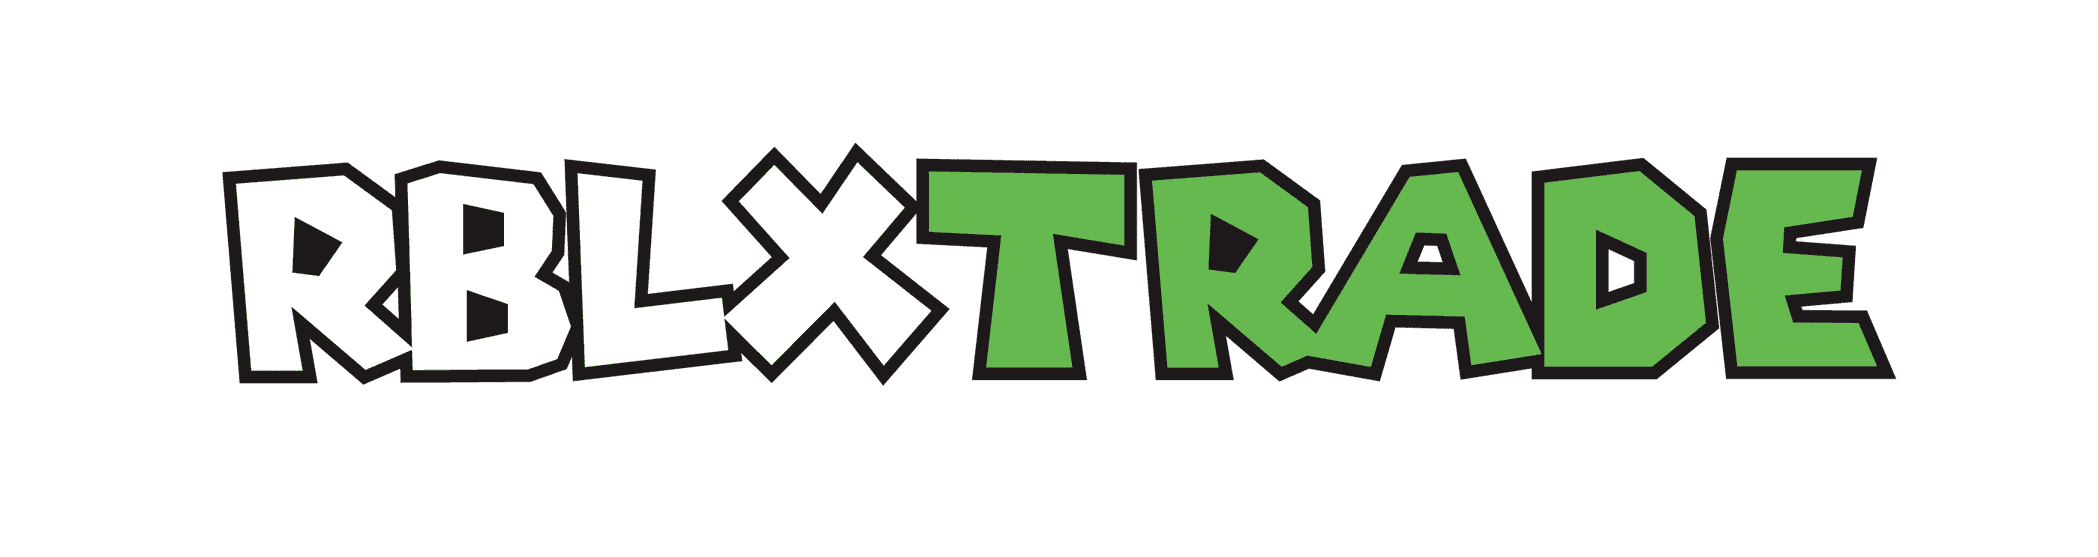 Catalog Rblx Trade View Explore Terminated Roblox Users